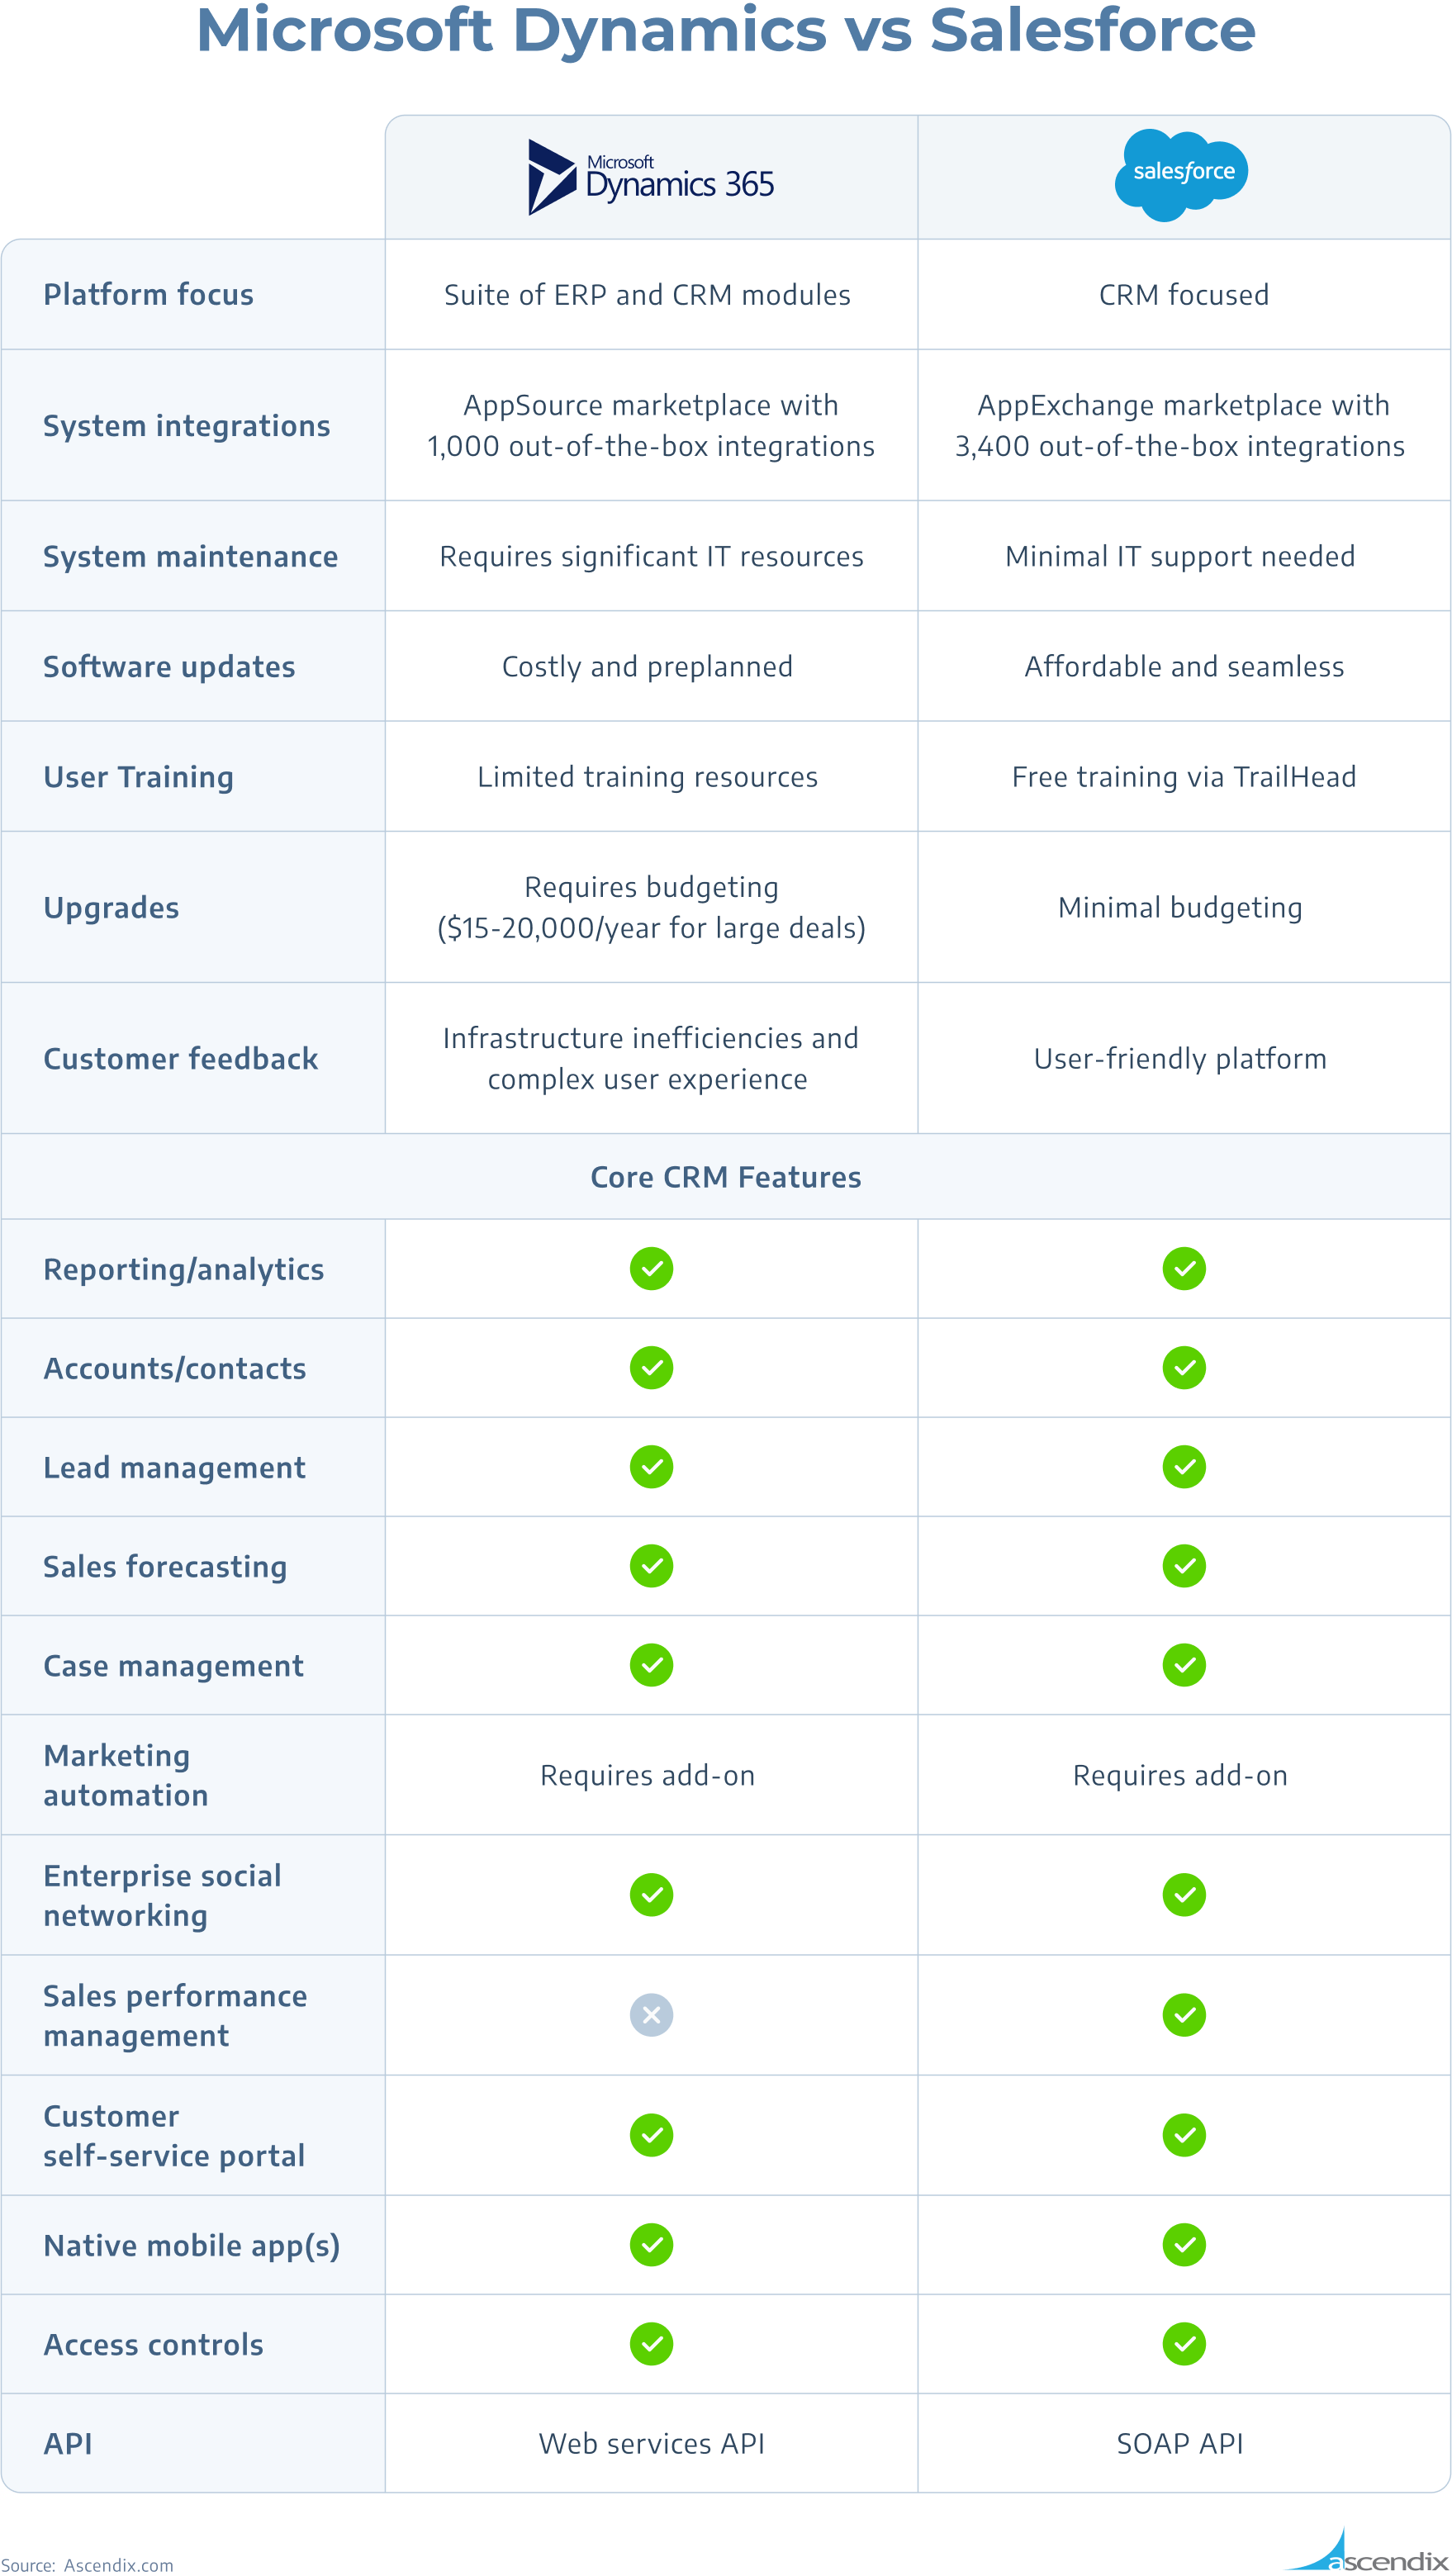 Microsoft Dynamics vs Salesforce comparison